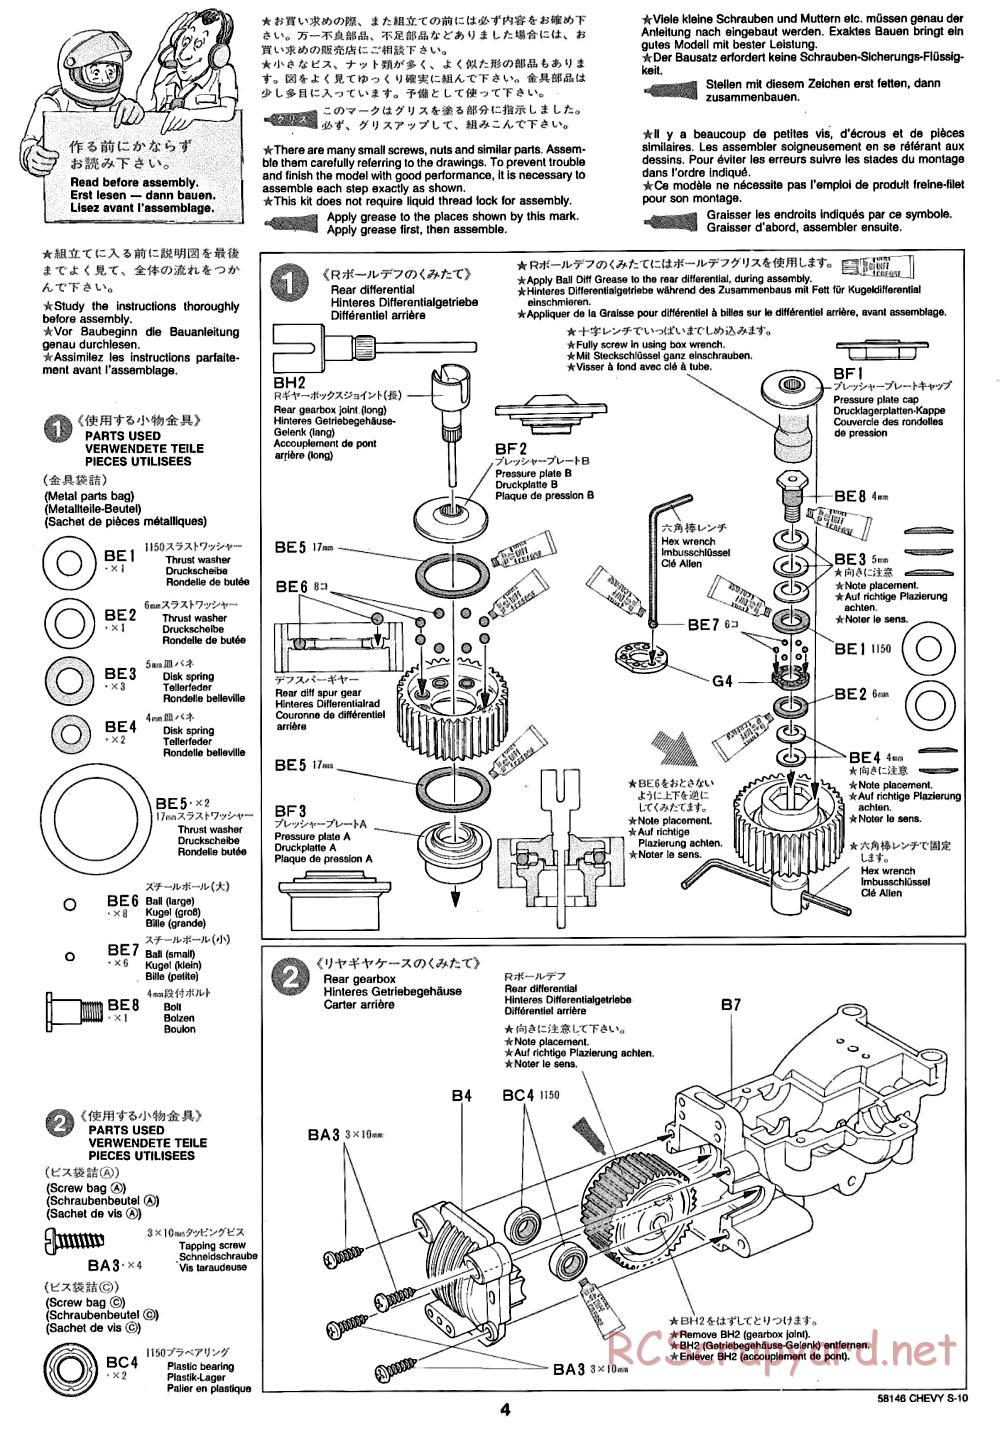 Tamiya - Chevy S-10 Chassis - Manual - Page 4